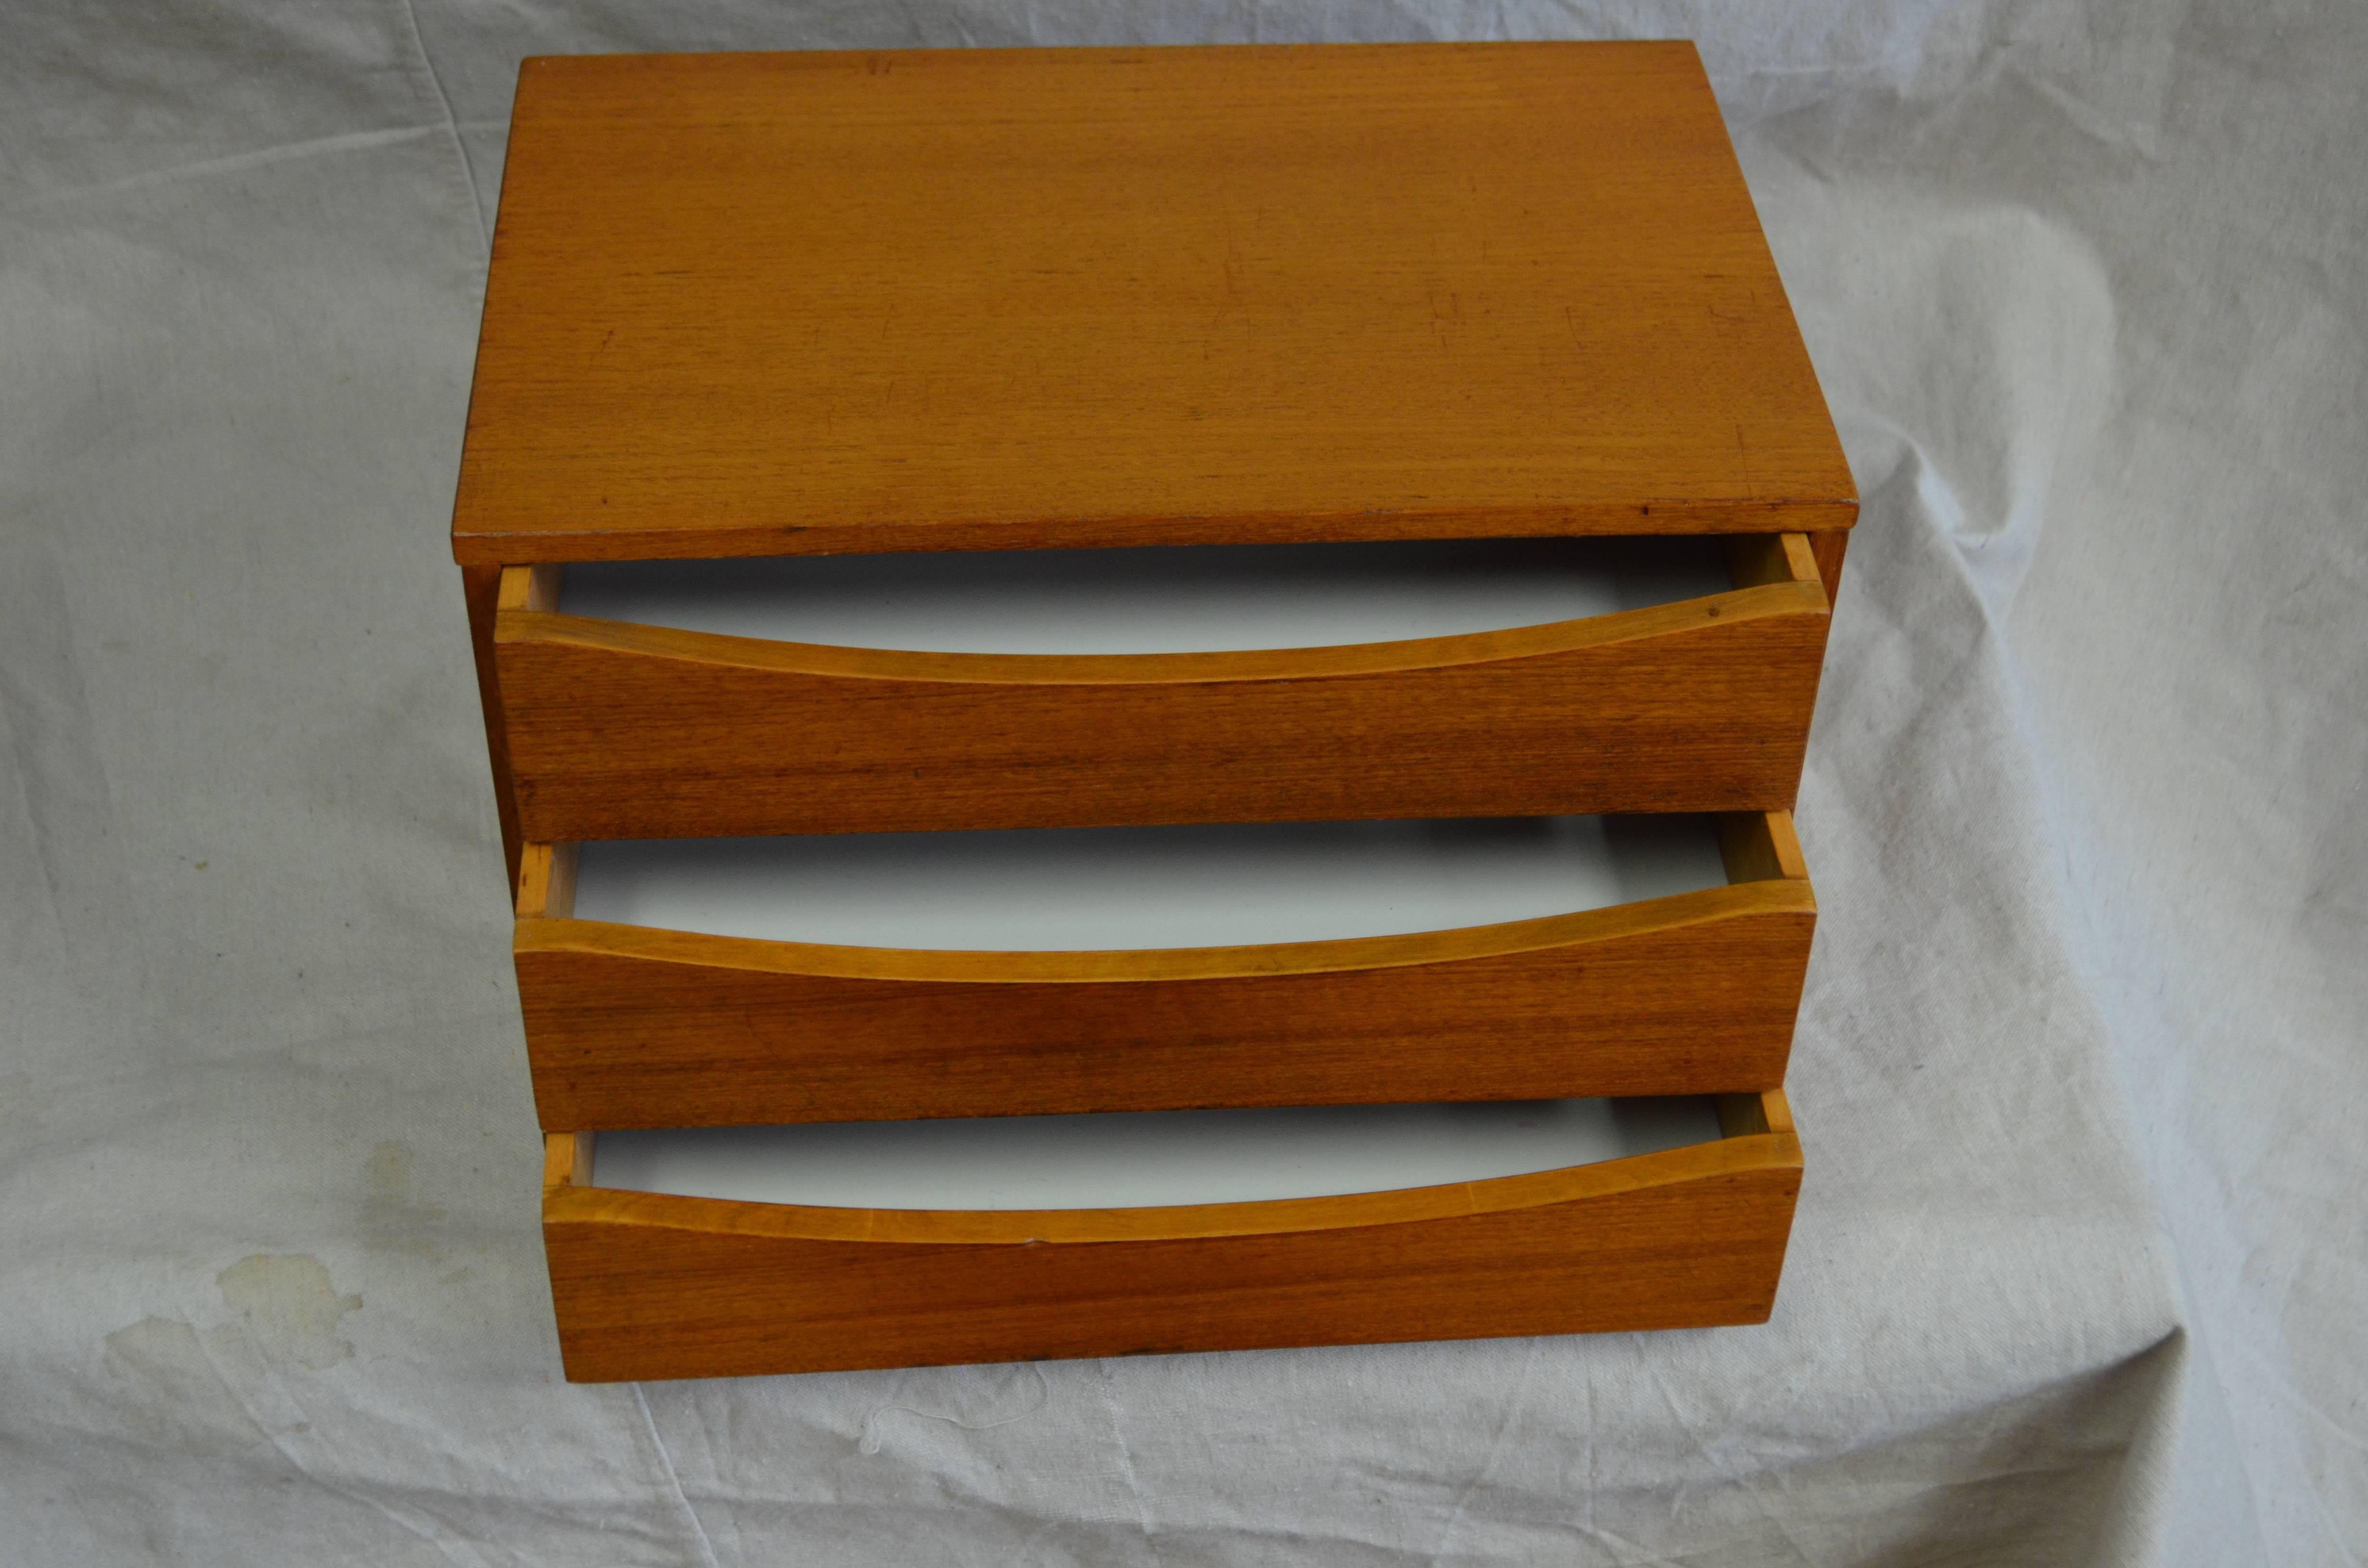 Swedish Jewelry/Letter Box of Teak Designed by Arne Vodder, Made in Sweden